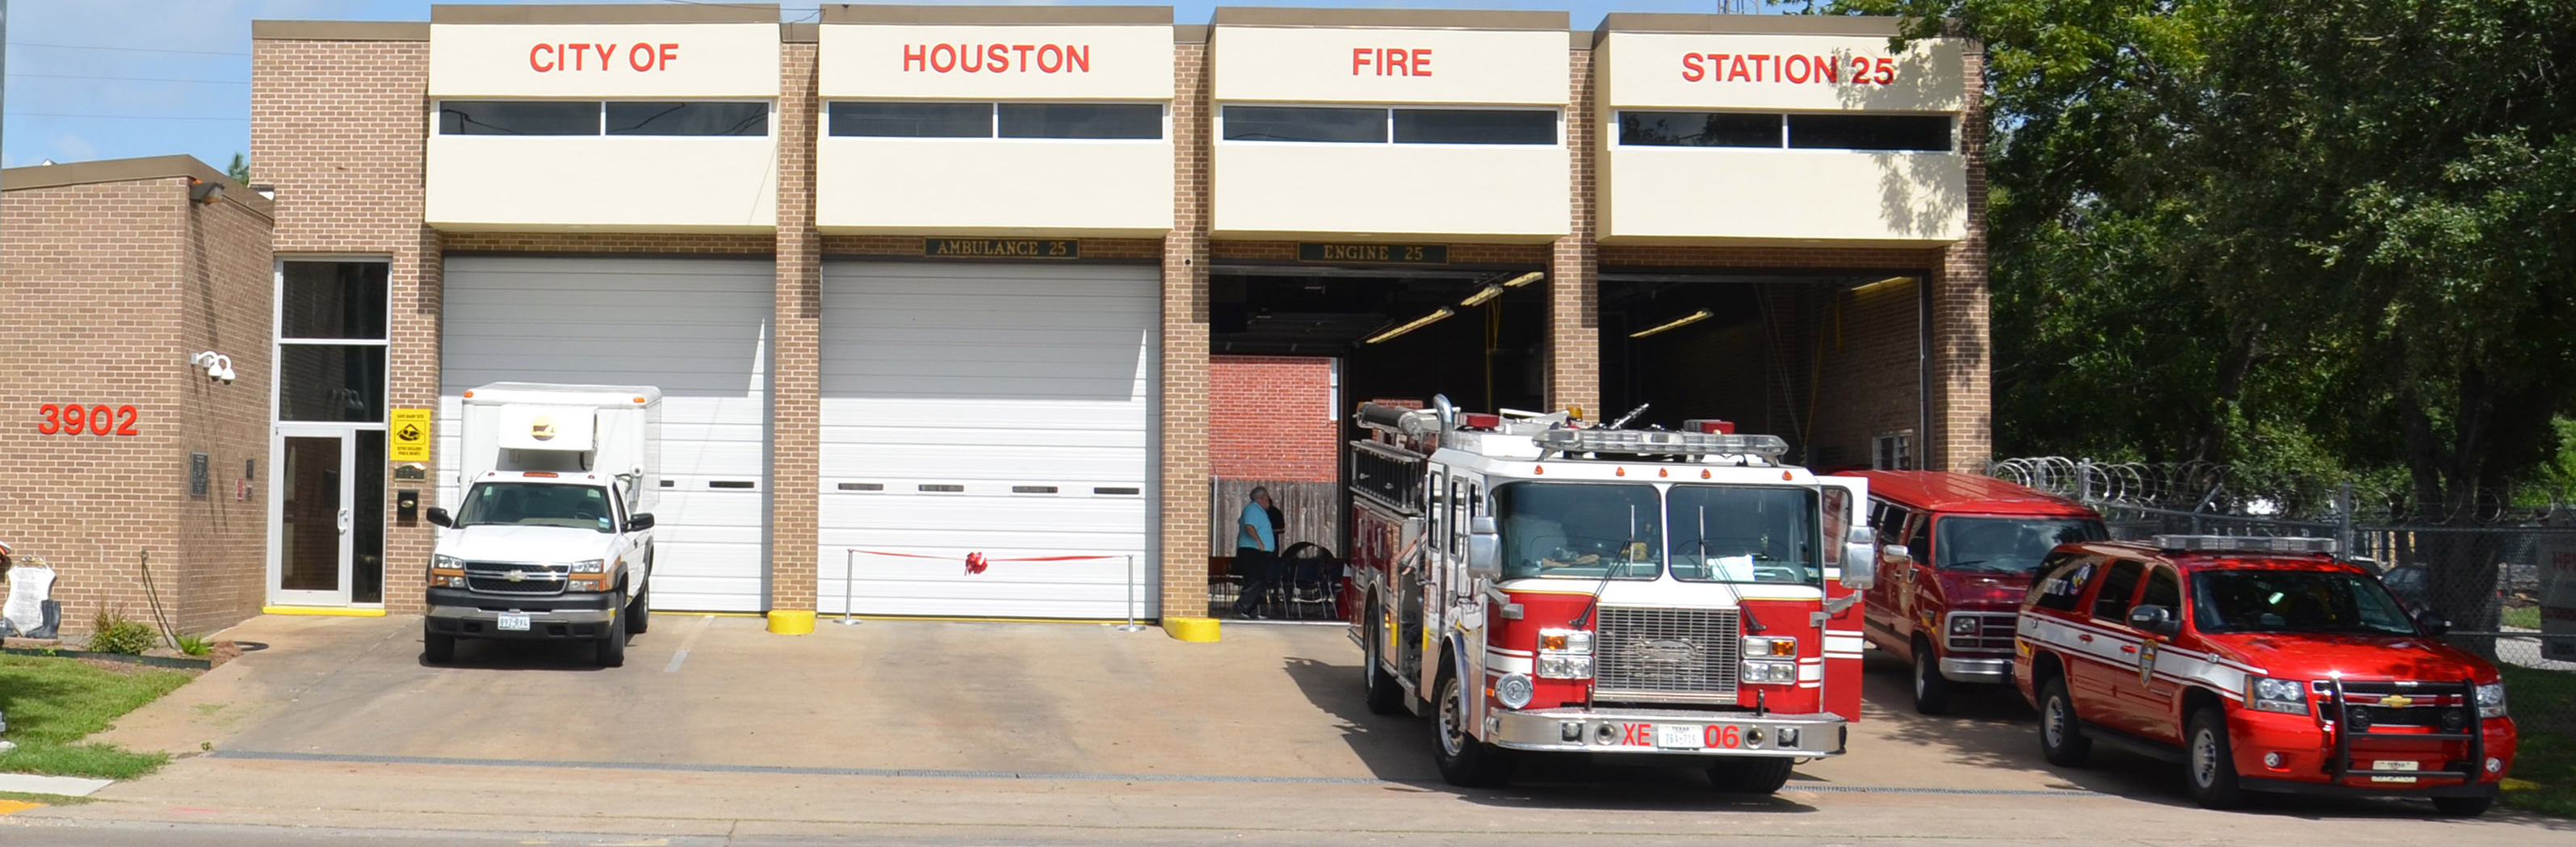 HFD Fire Station 25